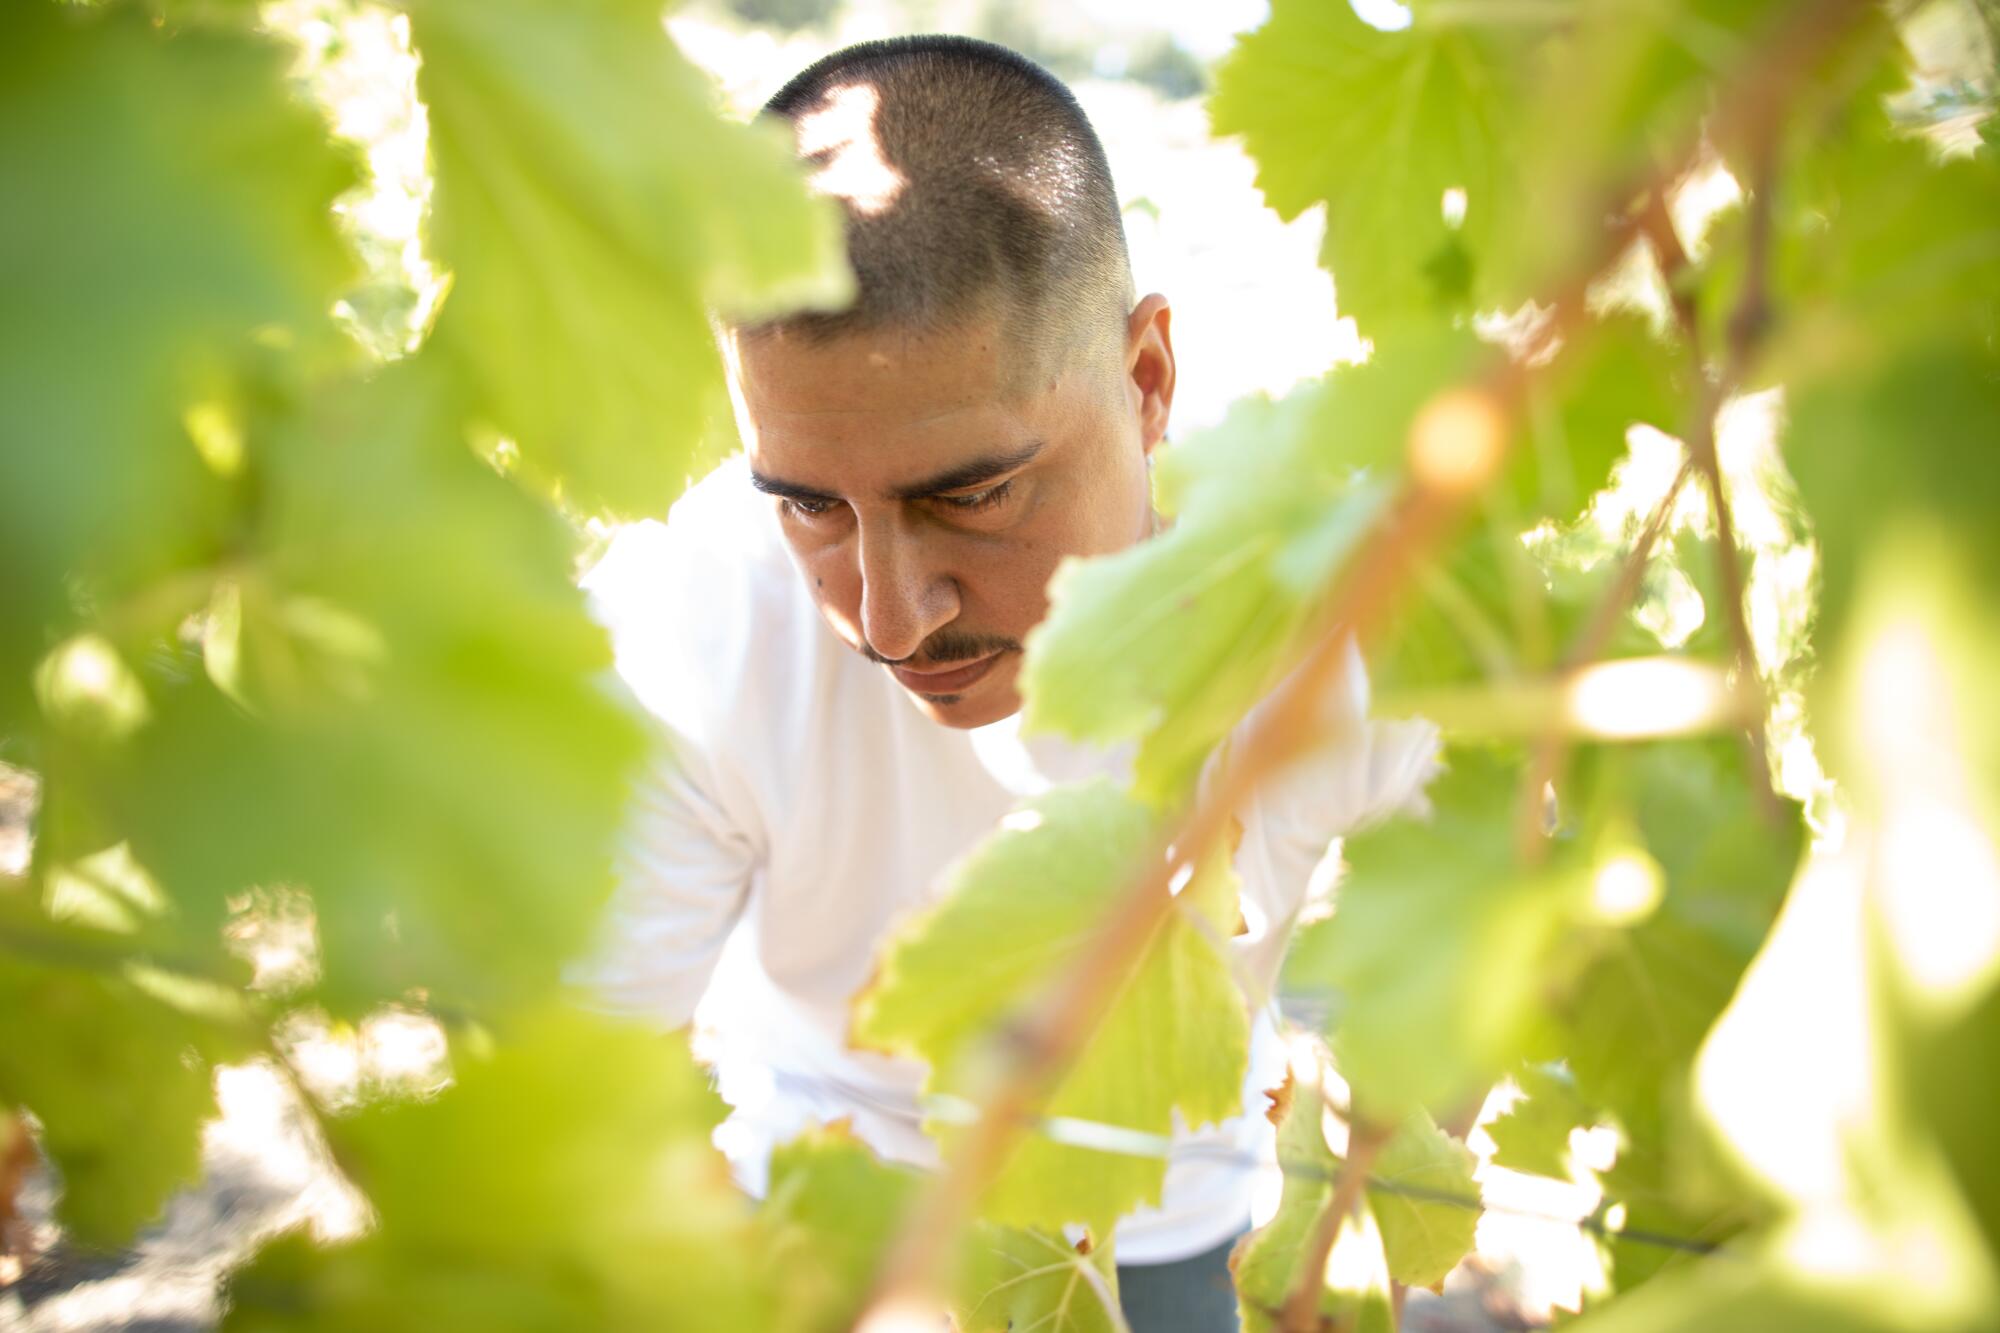 A man works in a vineyard